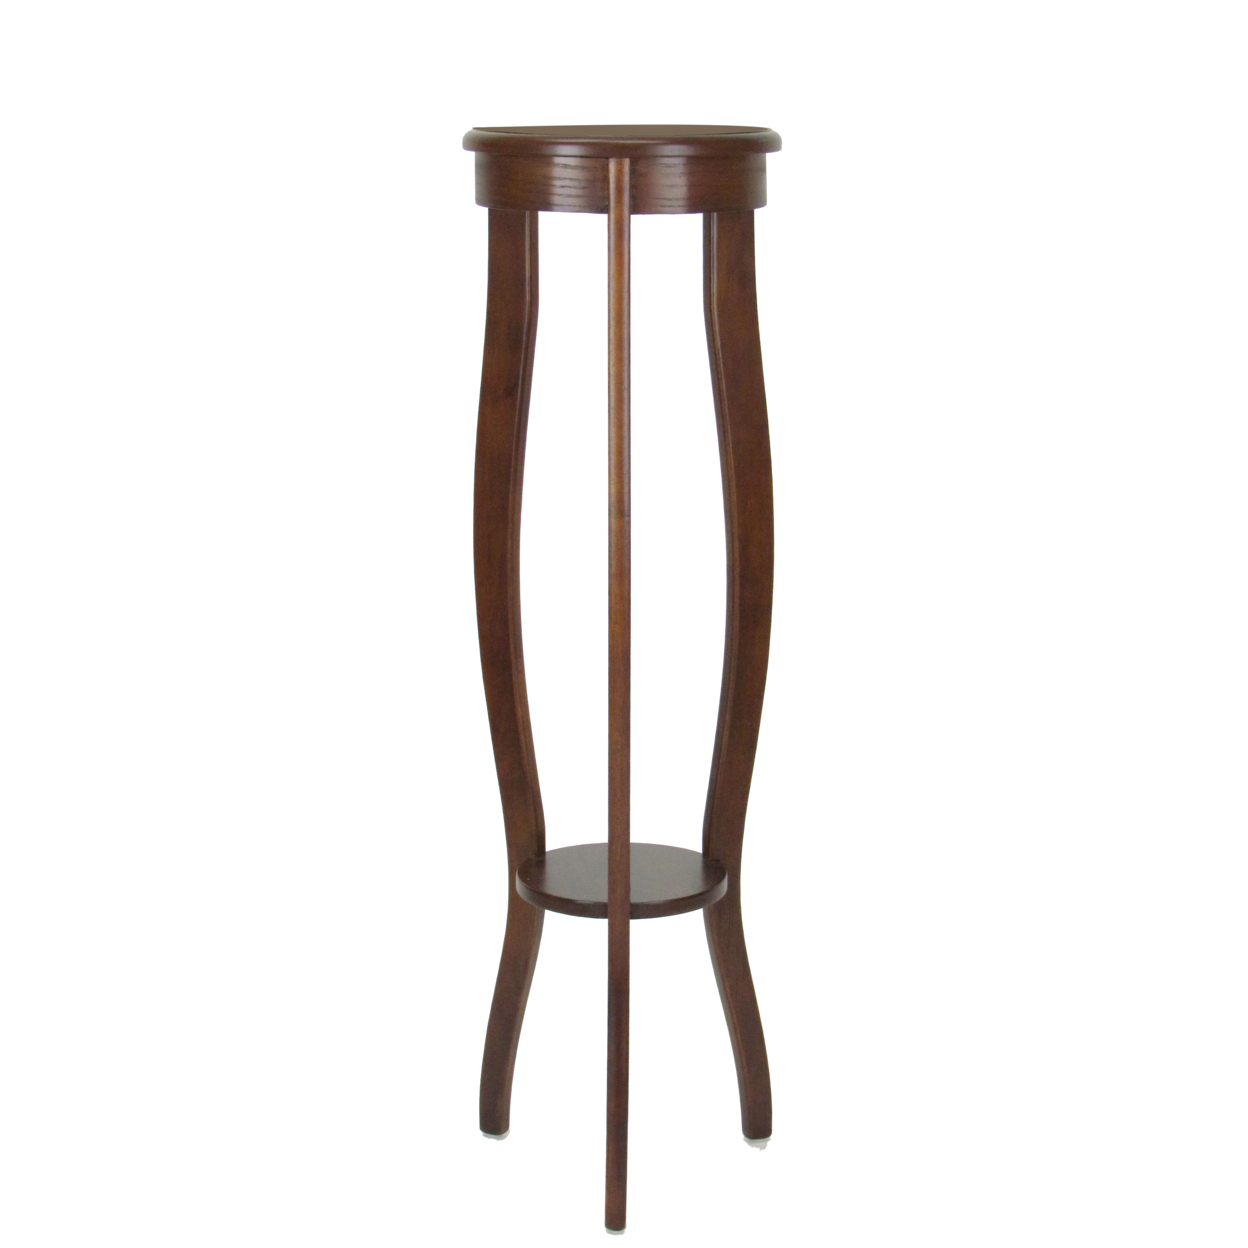 Round Pedestal Stand With Open Bottom Shelf And Flared Legs, Brown- Saltoro Sherpi